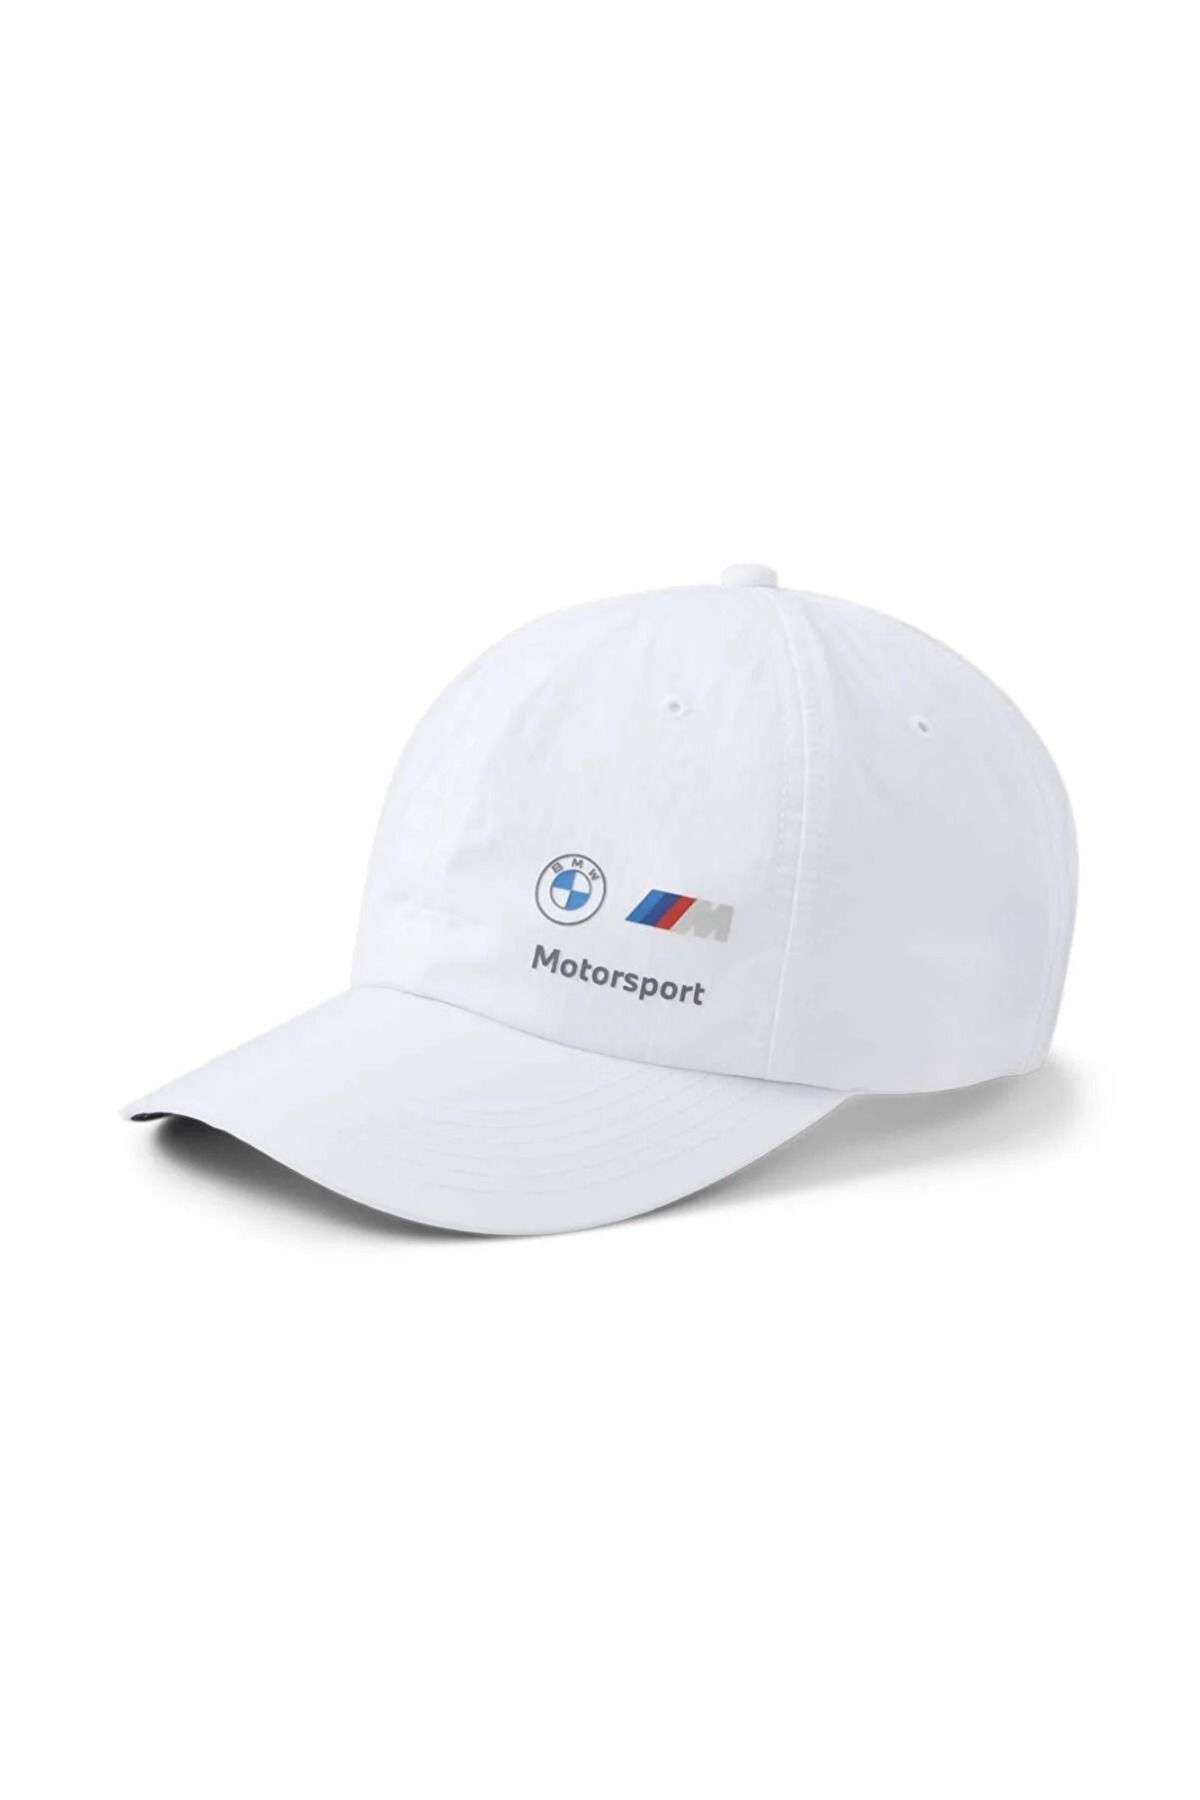 Puma BMW Motorsport کلاه سفید